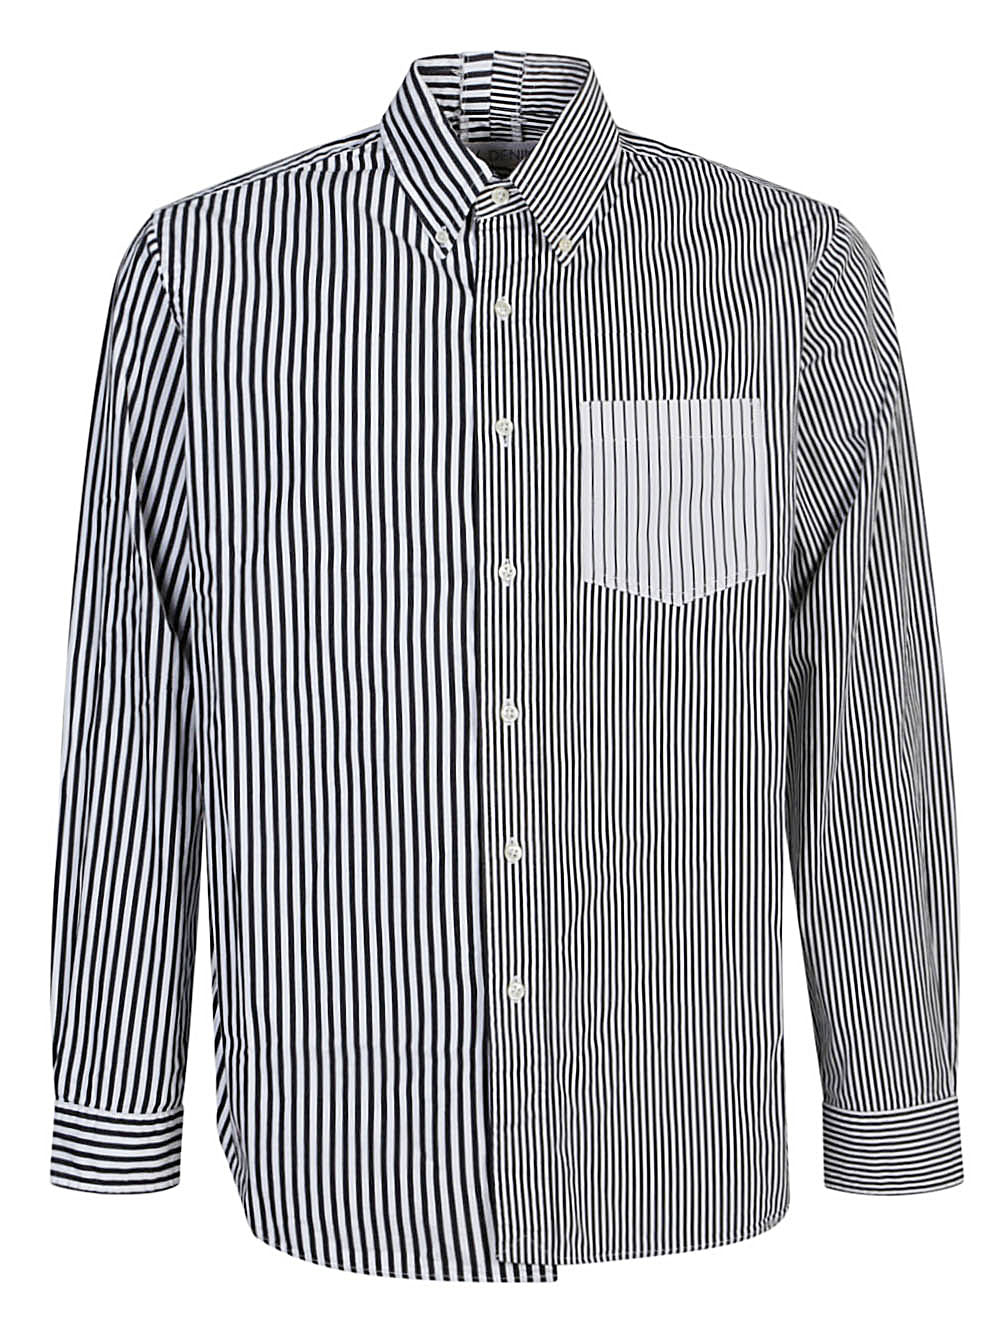 Contrast striped cotton shirt